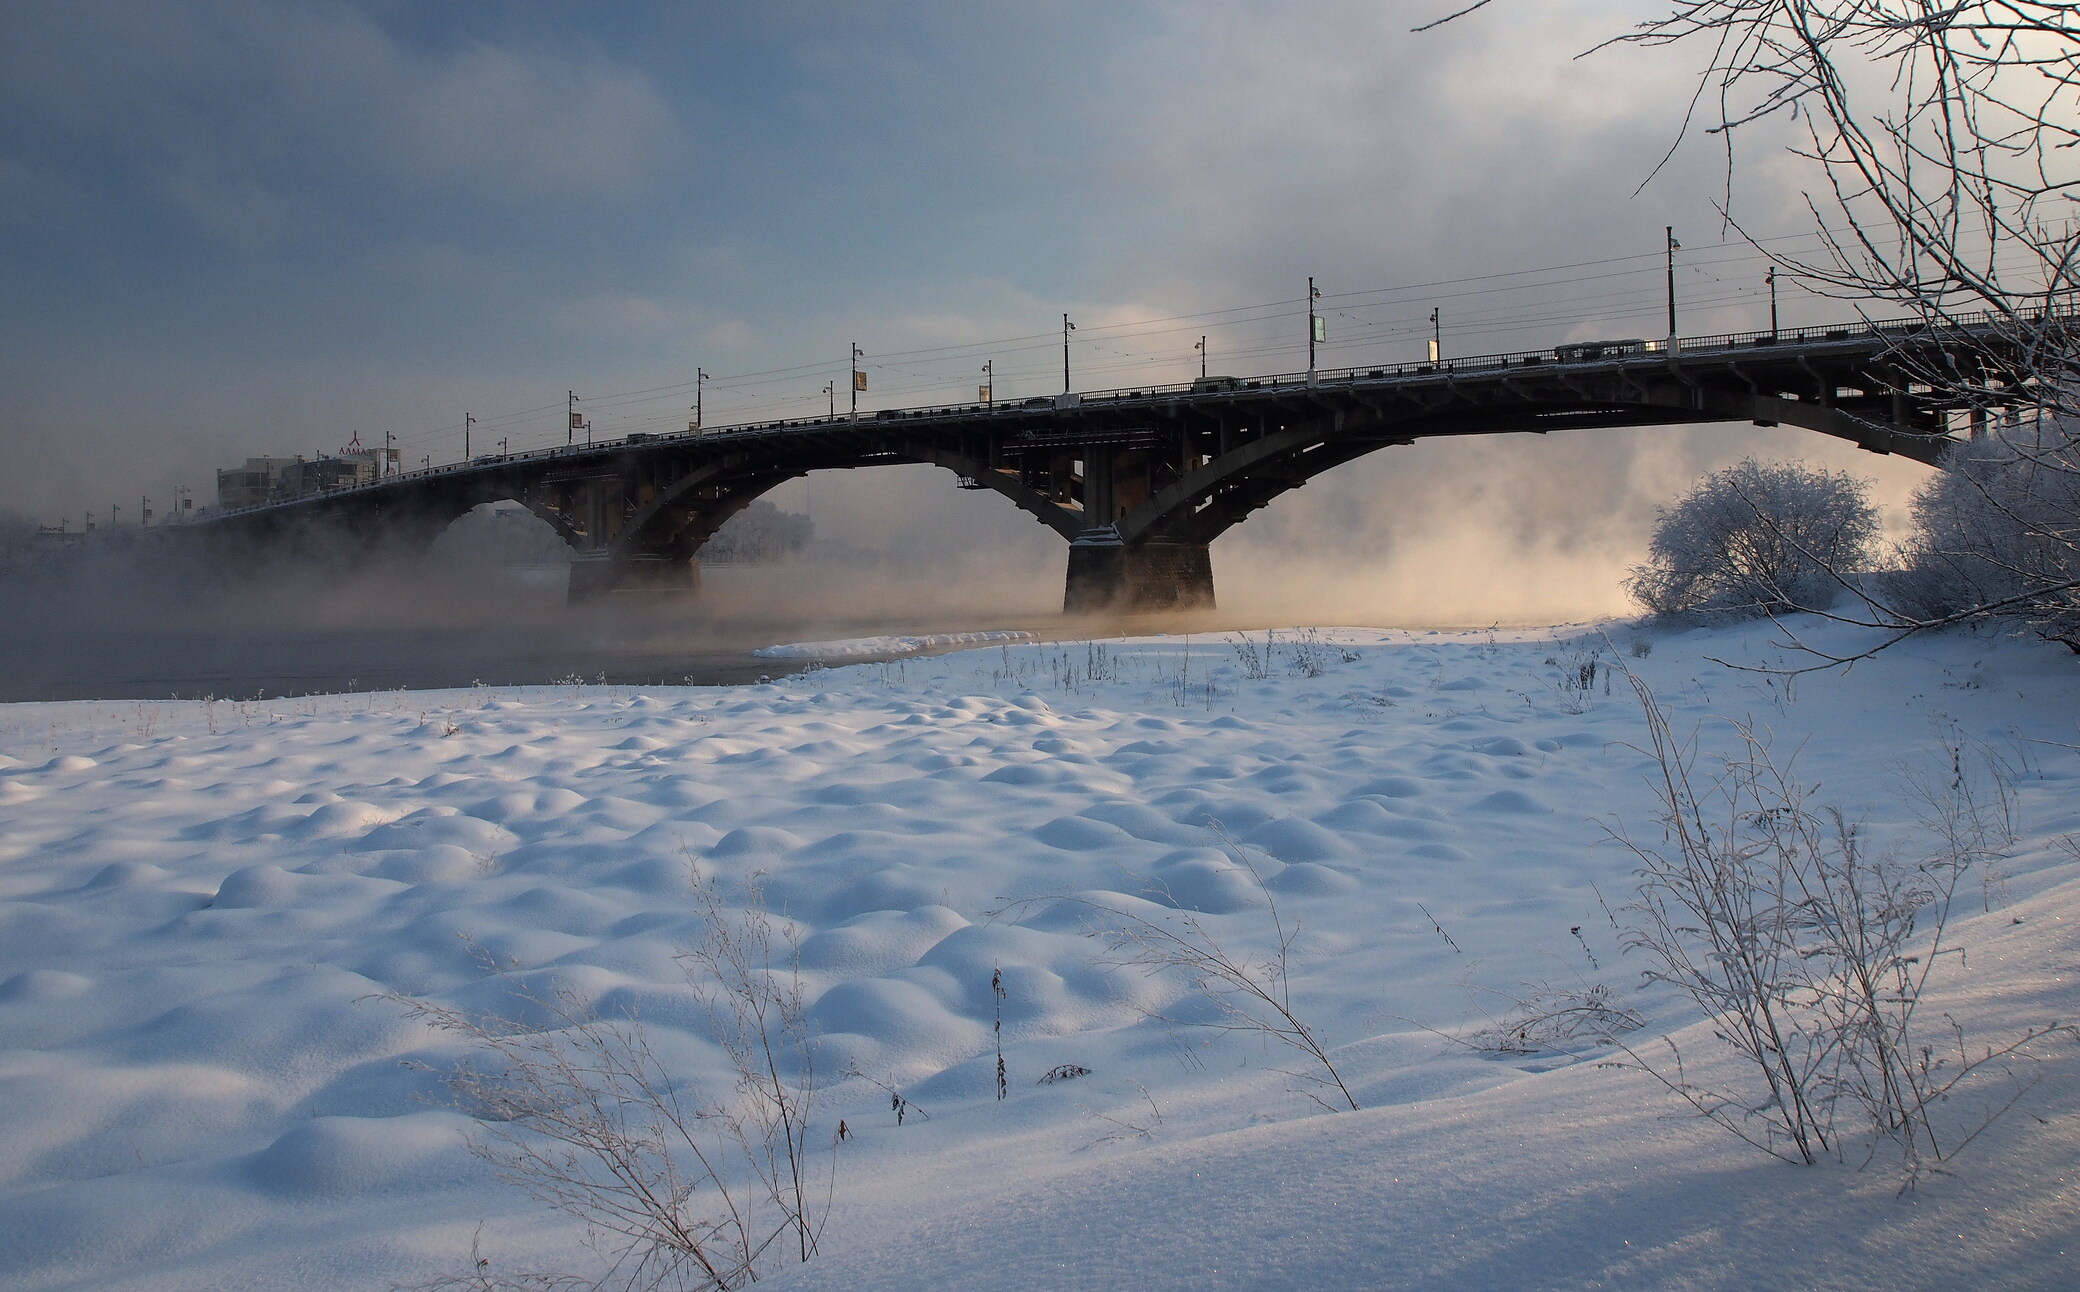 ...И снова мост на Ангаре в морозную погоду...